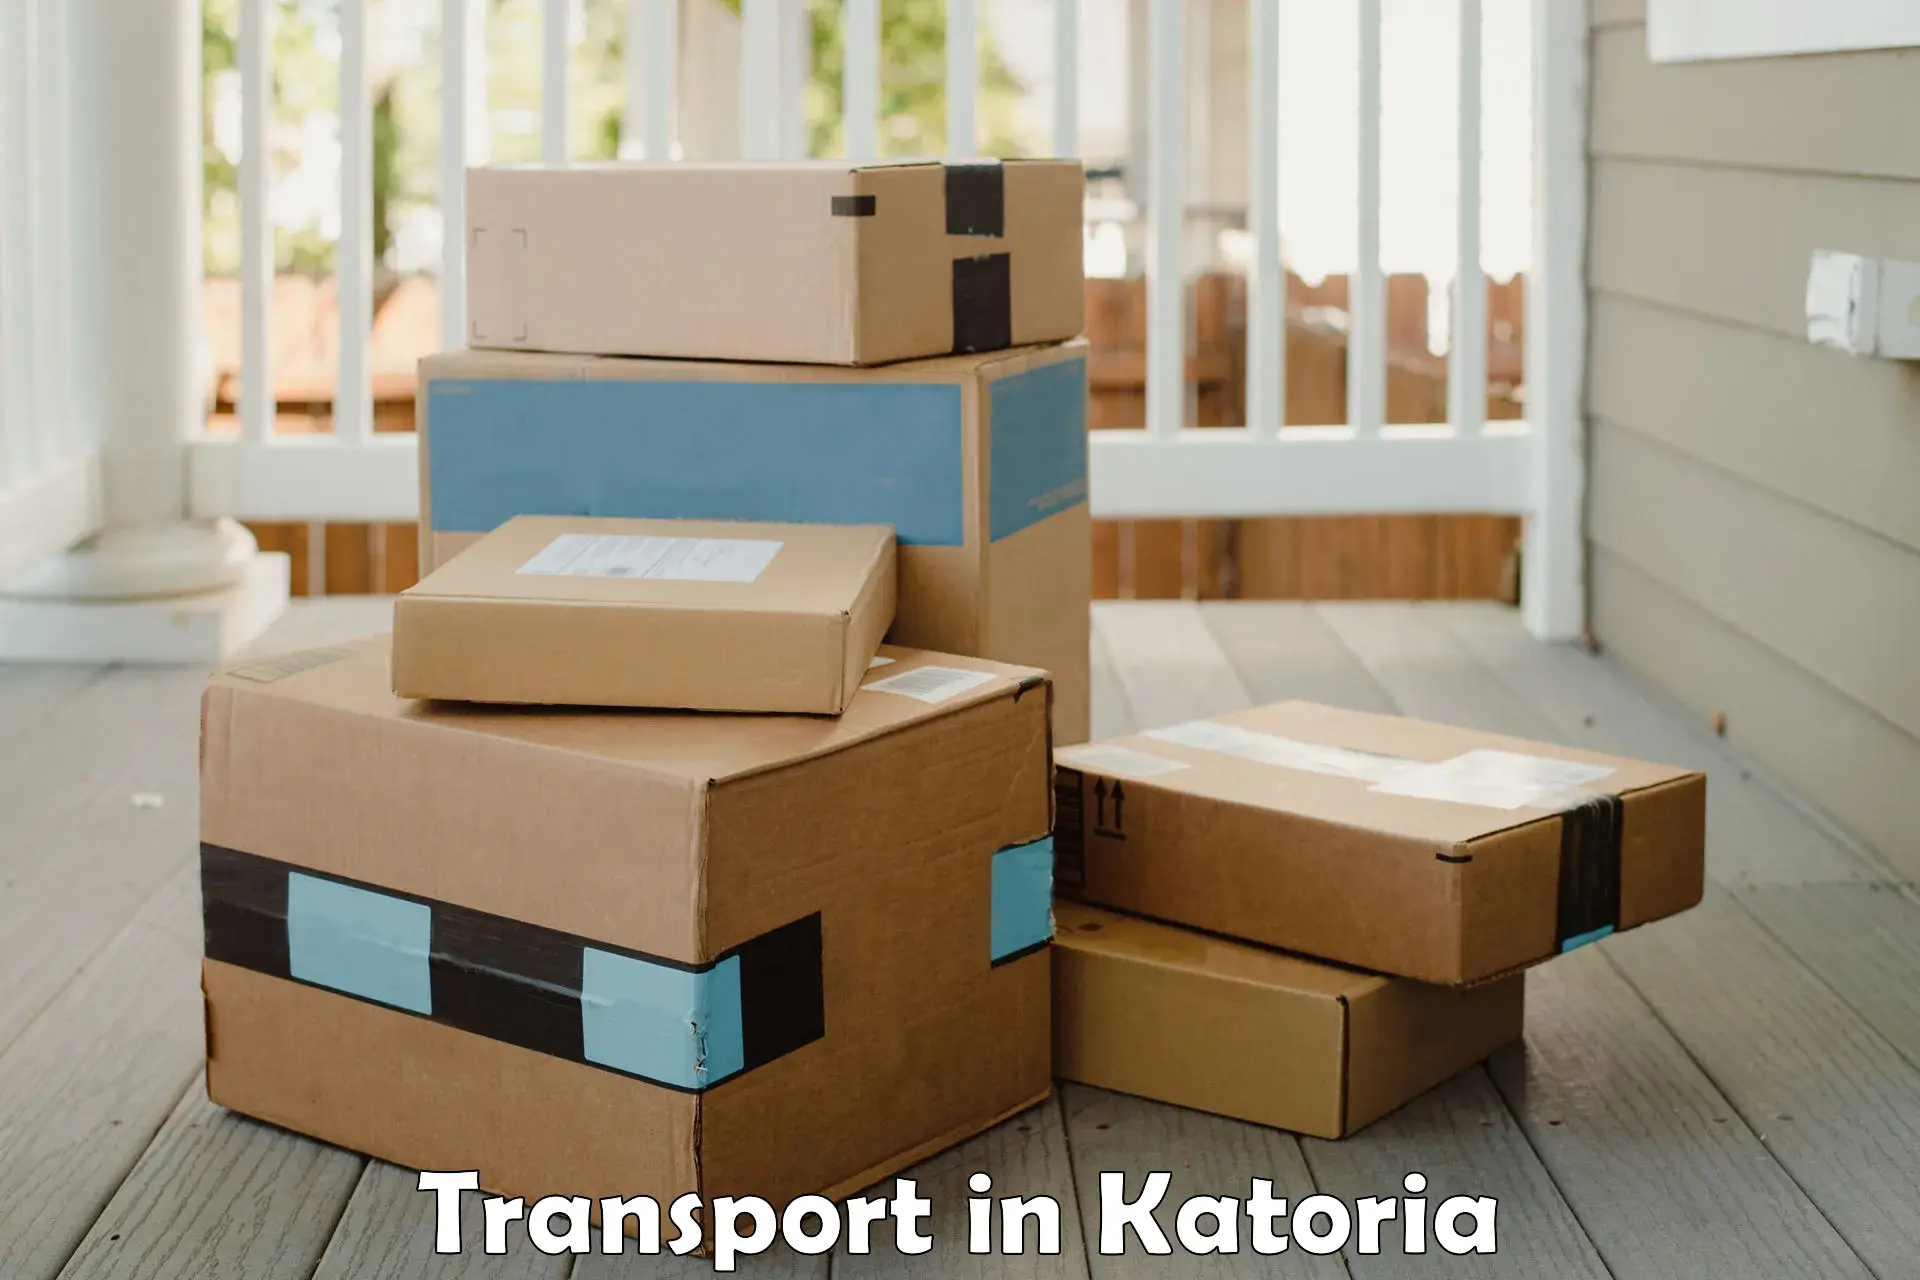 Container transport service in Katoria